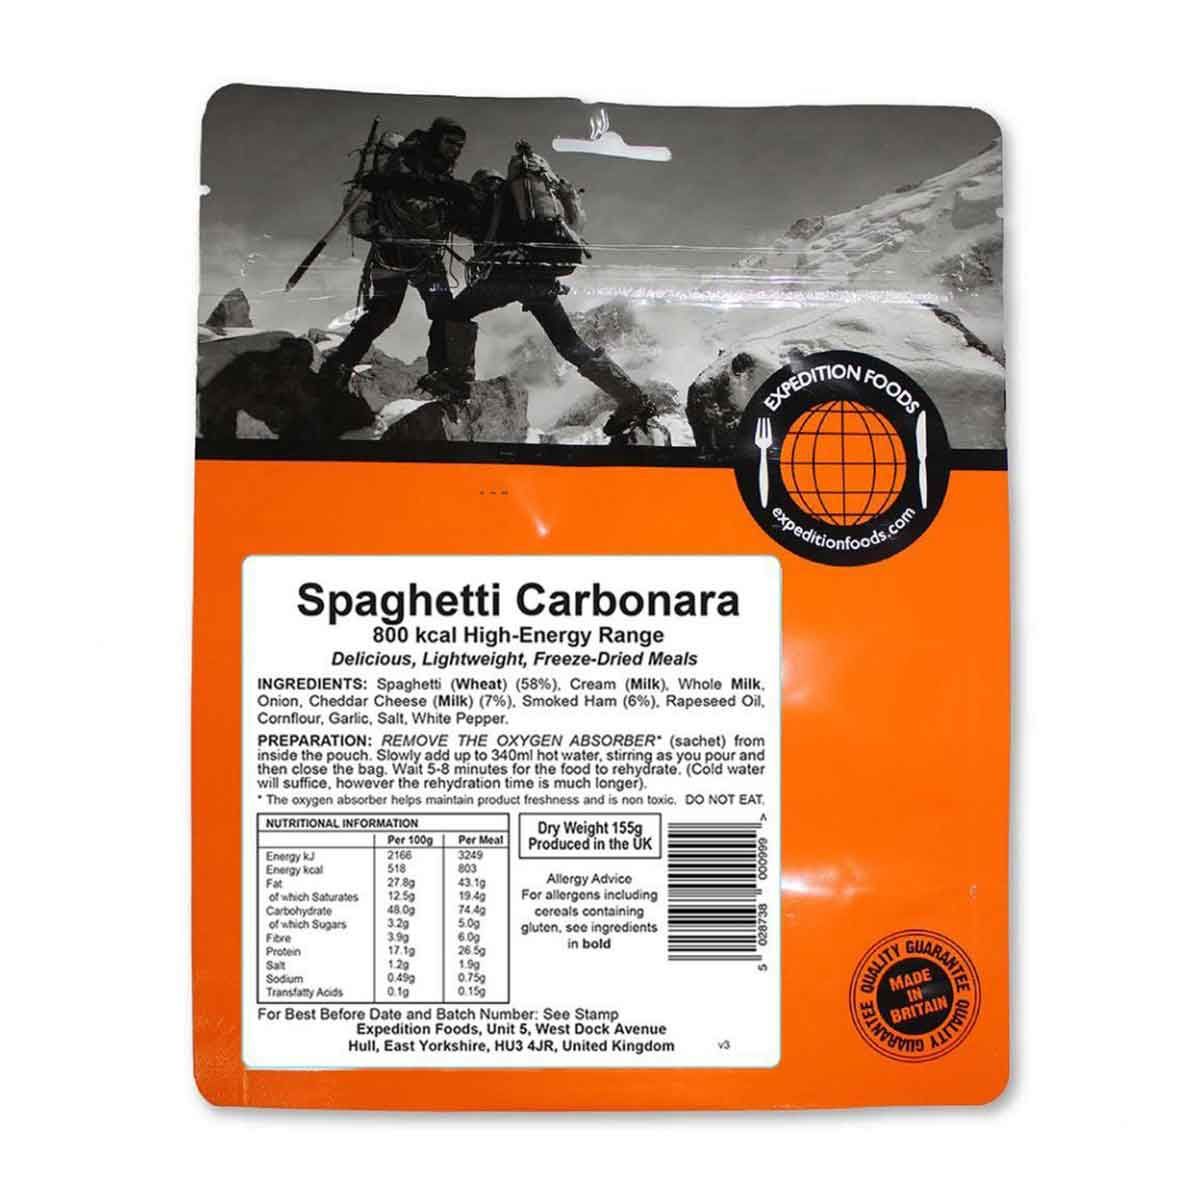 Spaghetti carbonara - Grand format